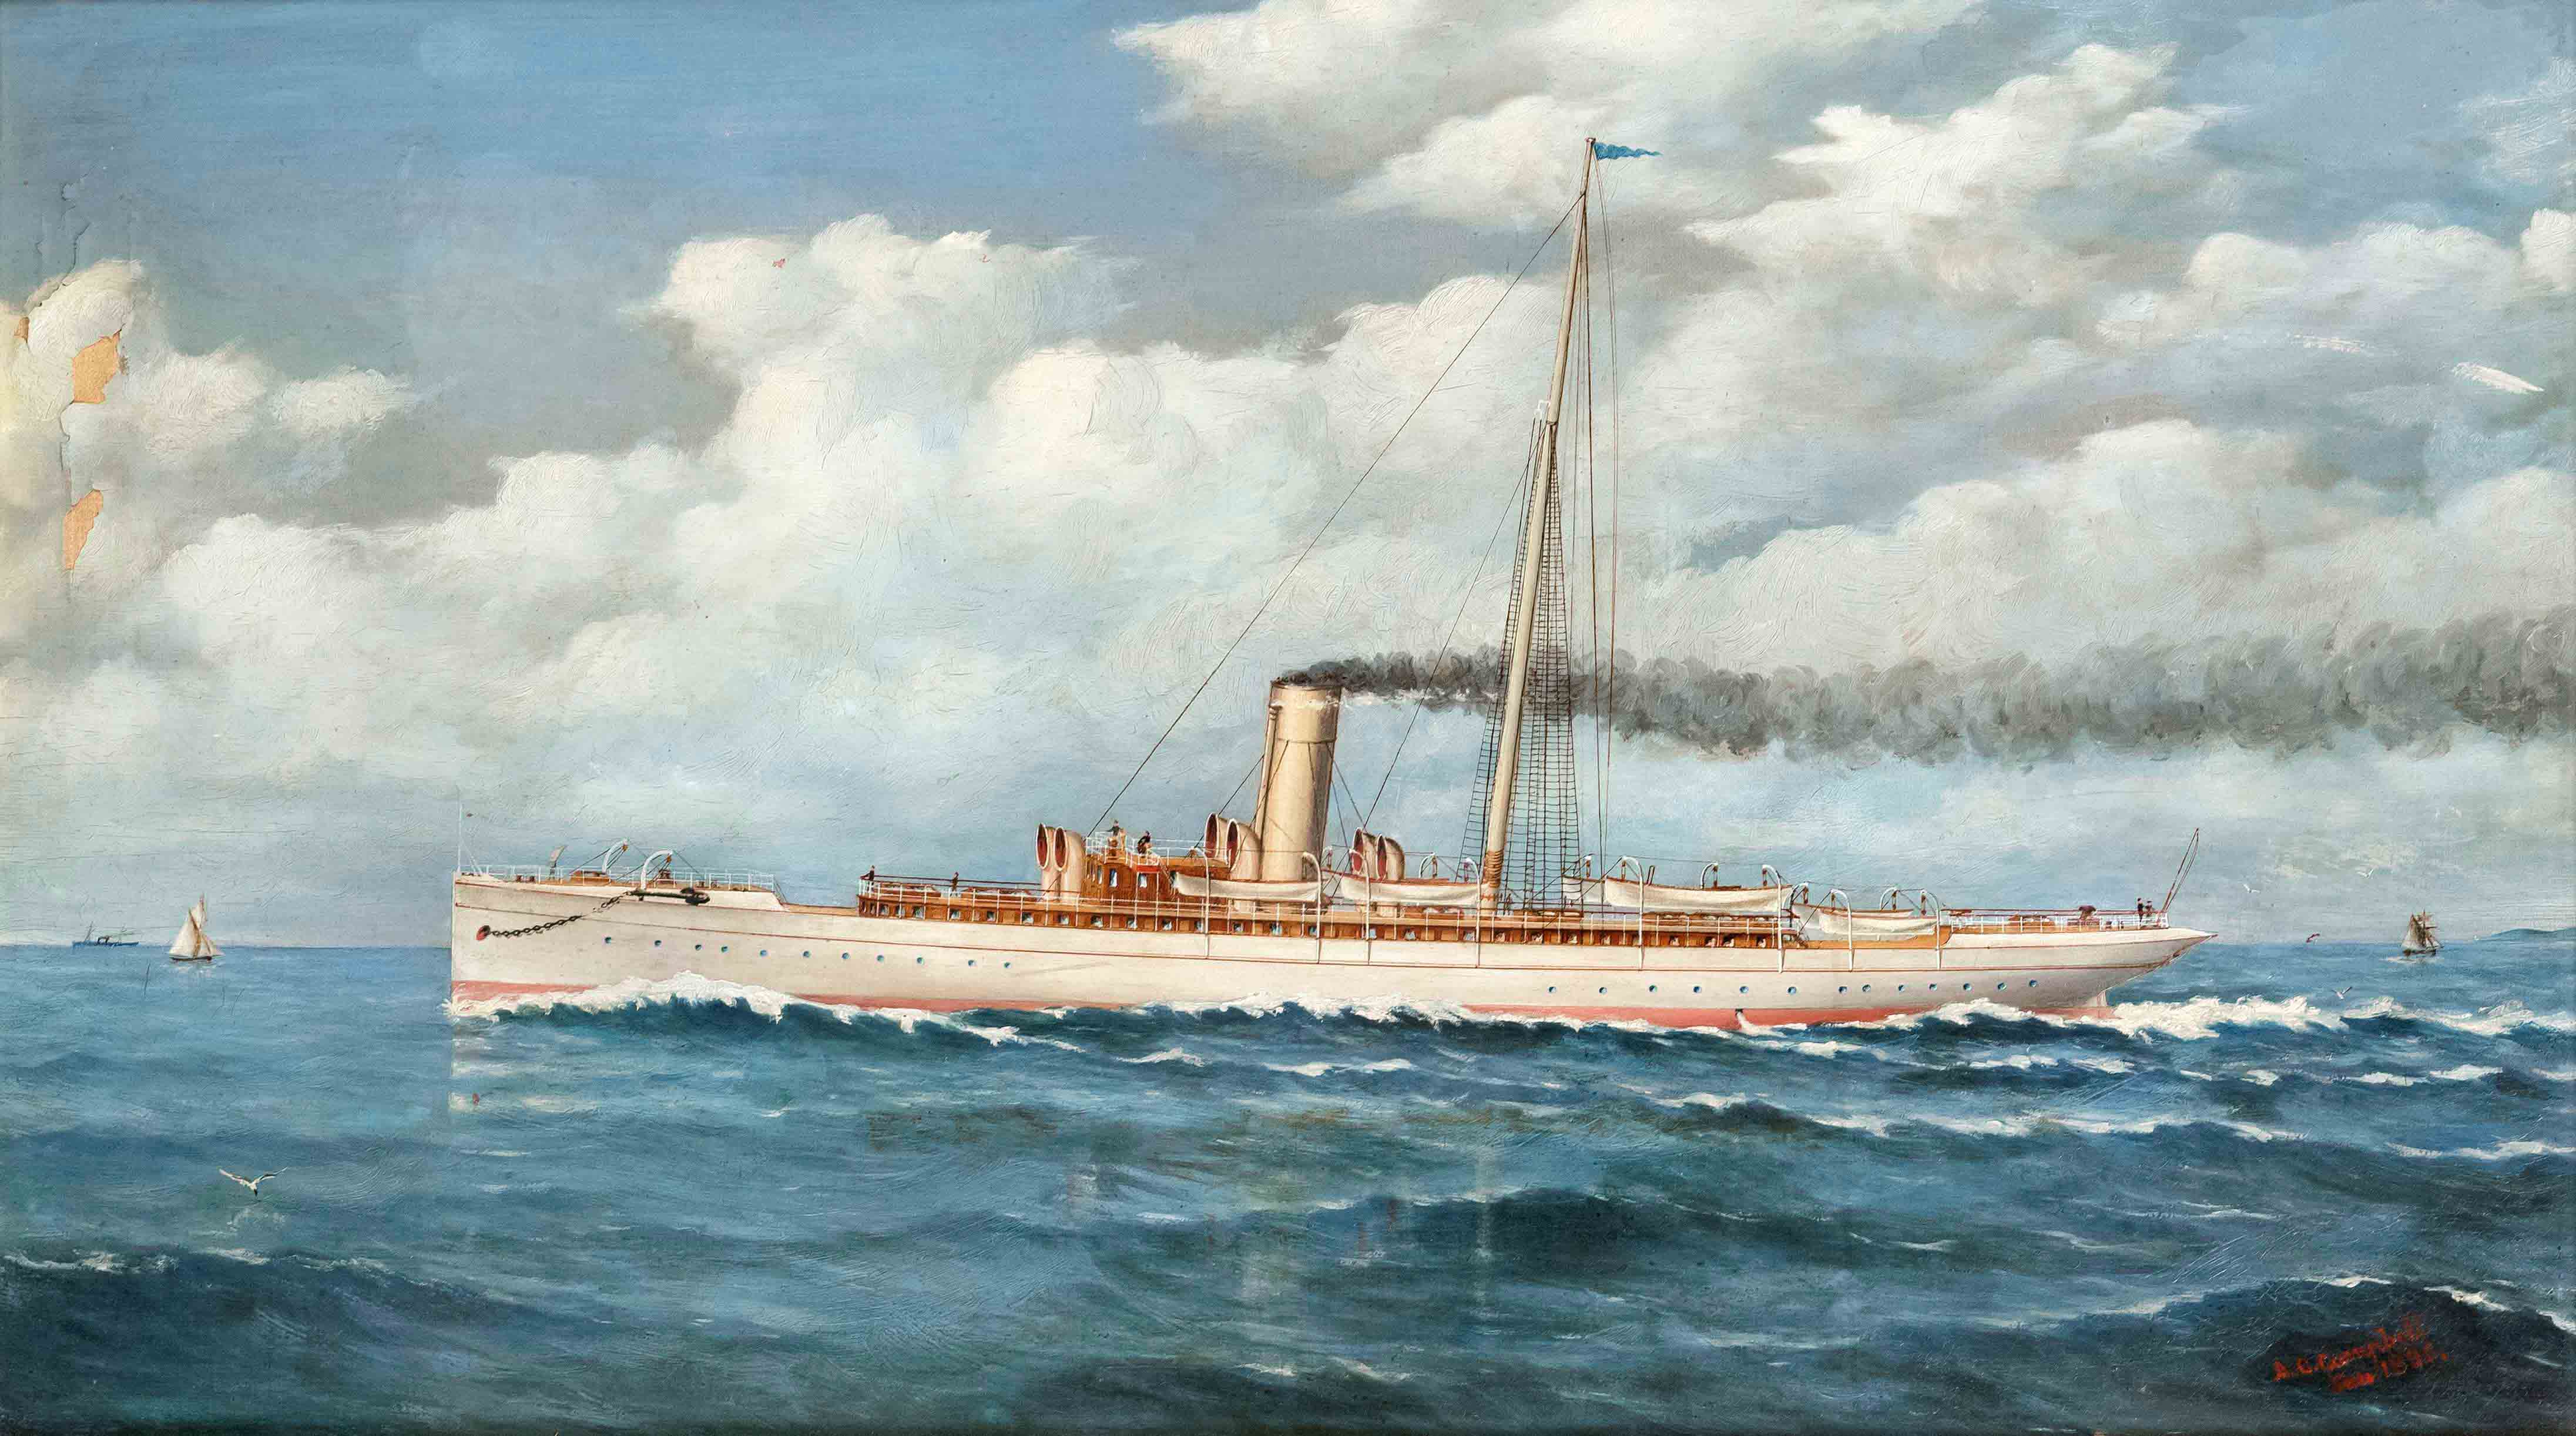 Campbell, A.C. English marine painter circa 1900. Captain's portrait of a steam sailer at sea. 1896.